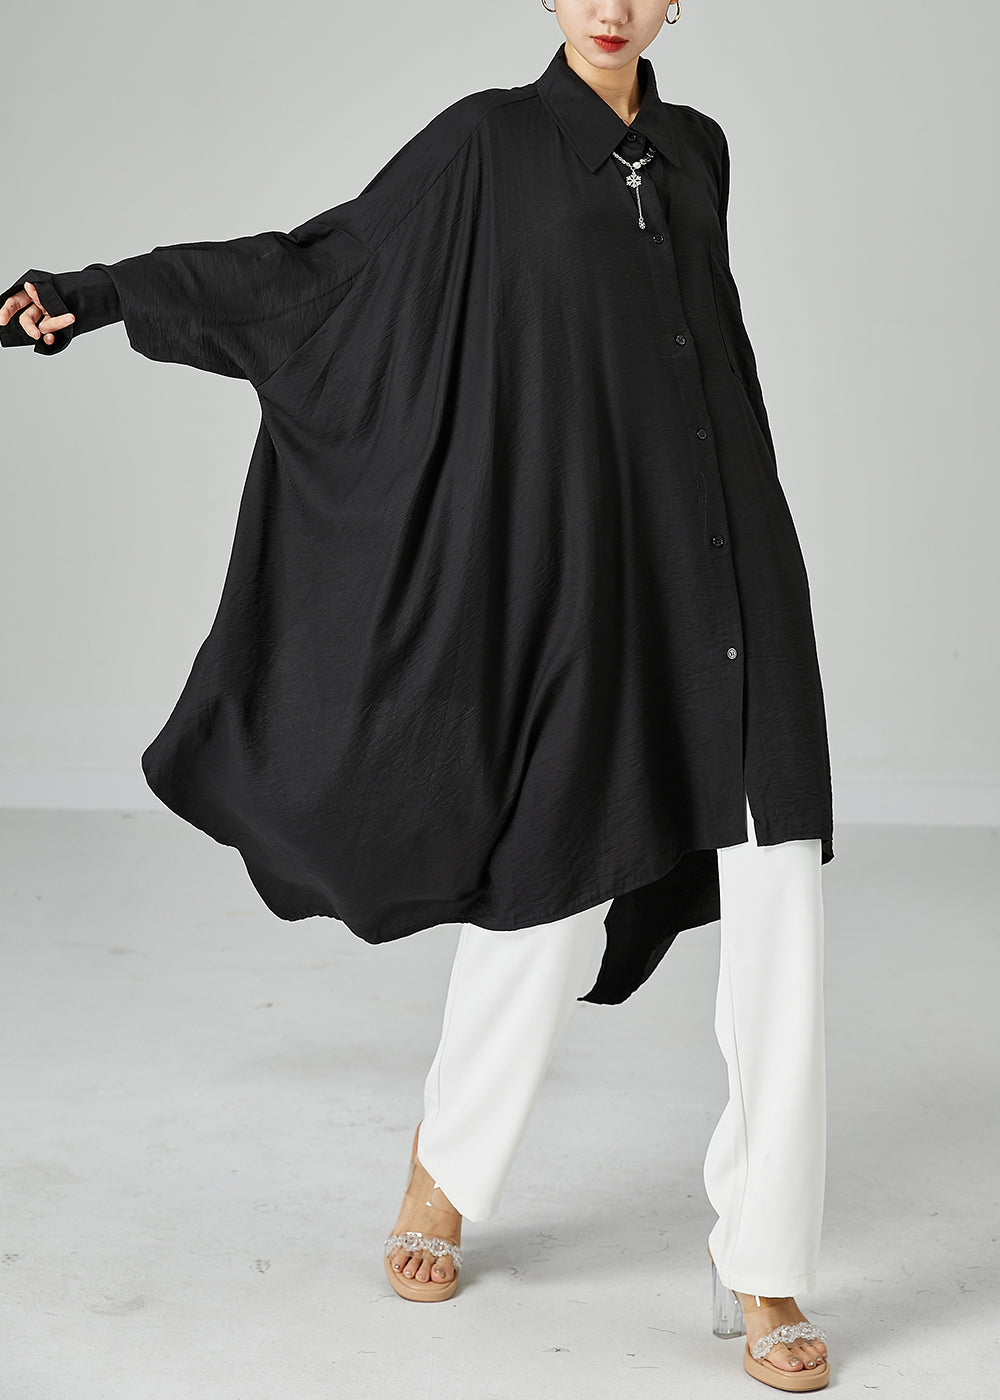 Style Black Asymmetrical Design Oversized Cotton A Line Dresses Summer